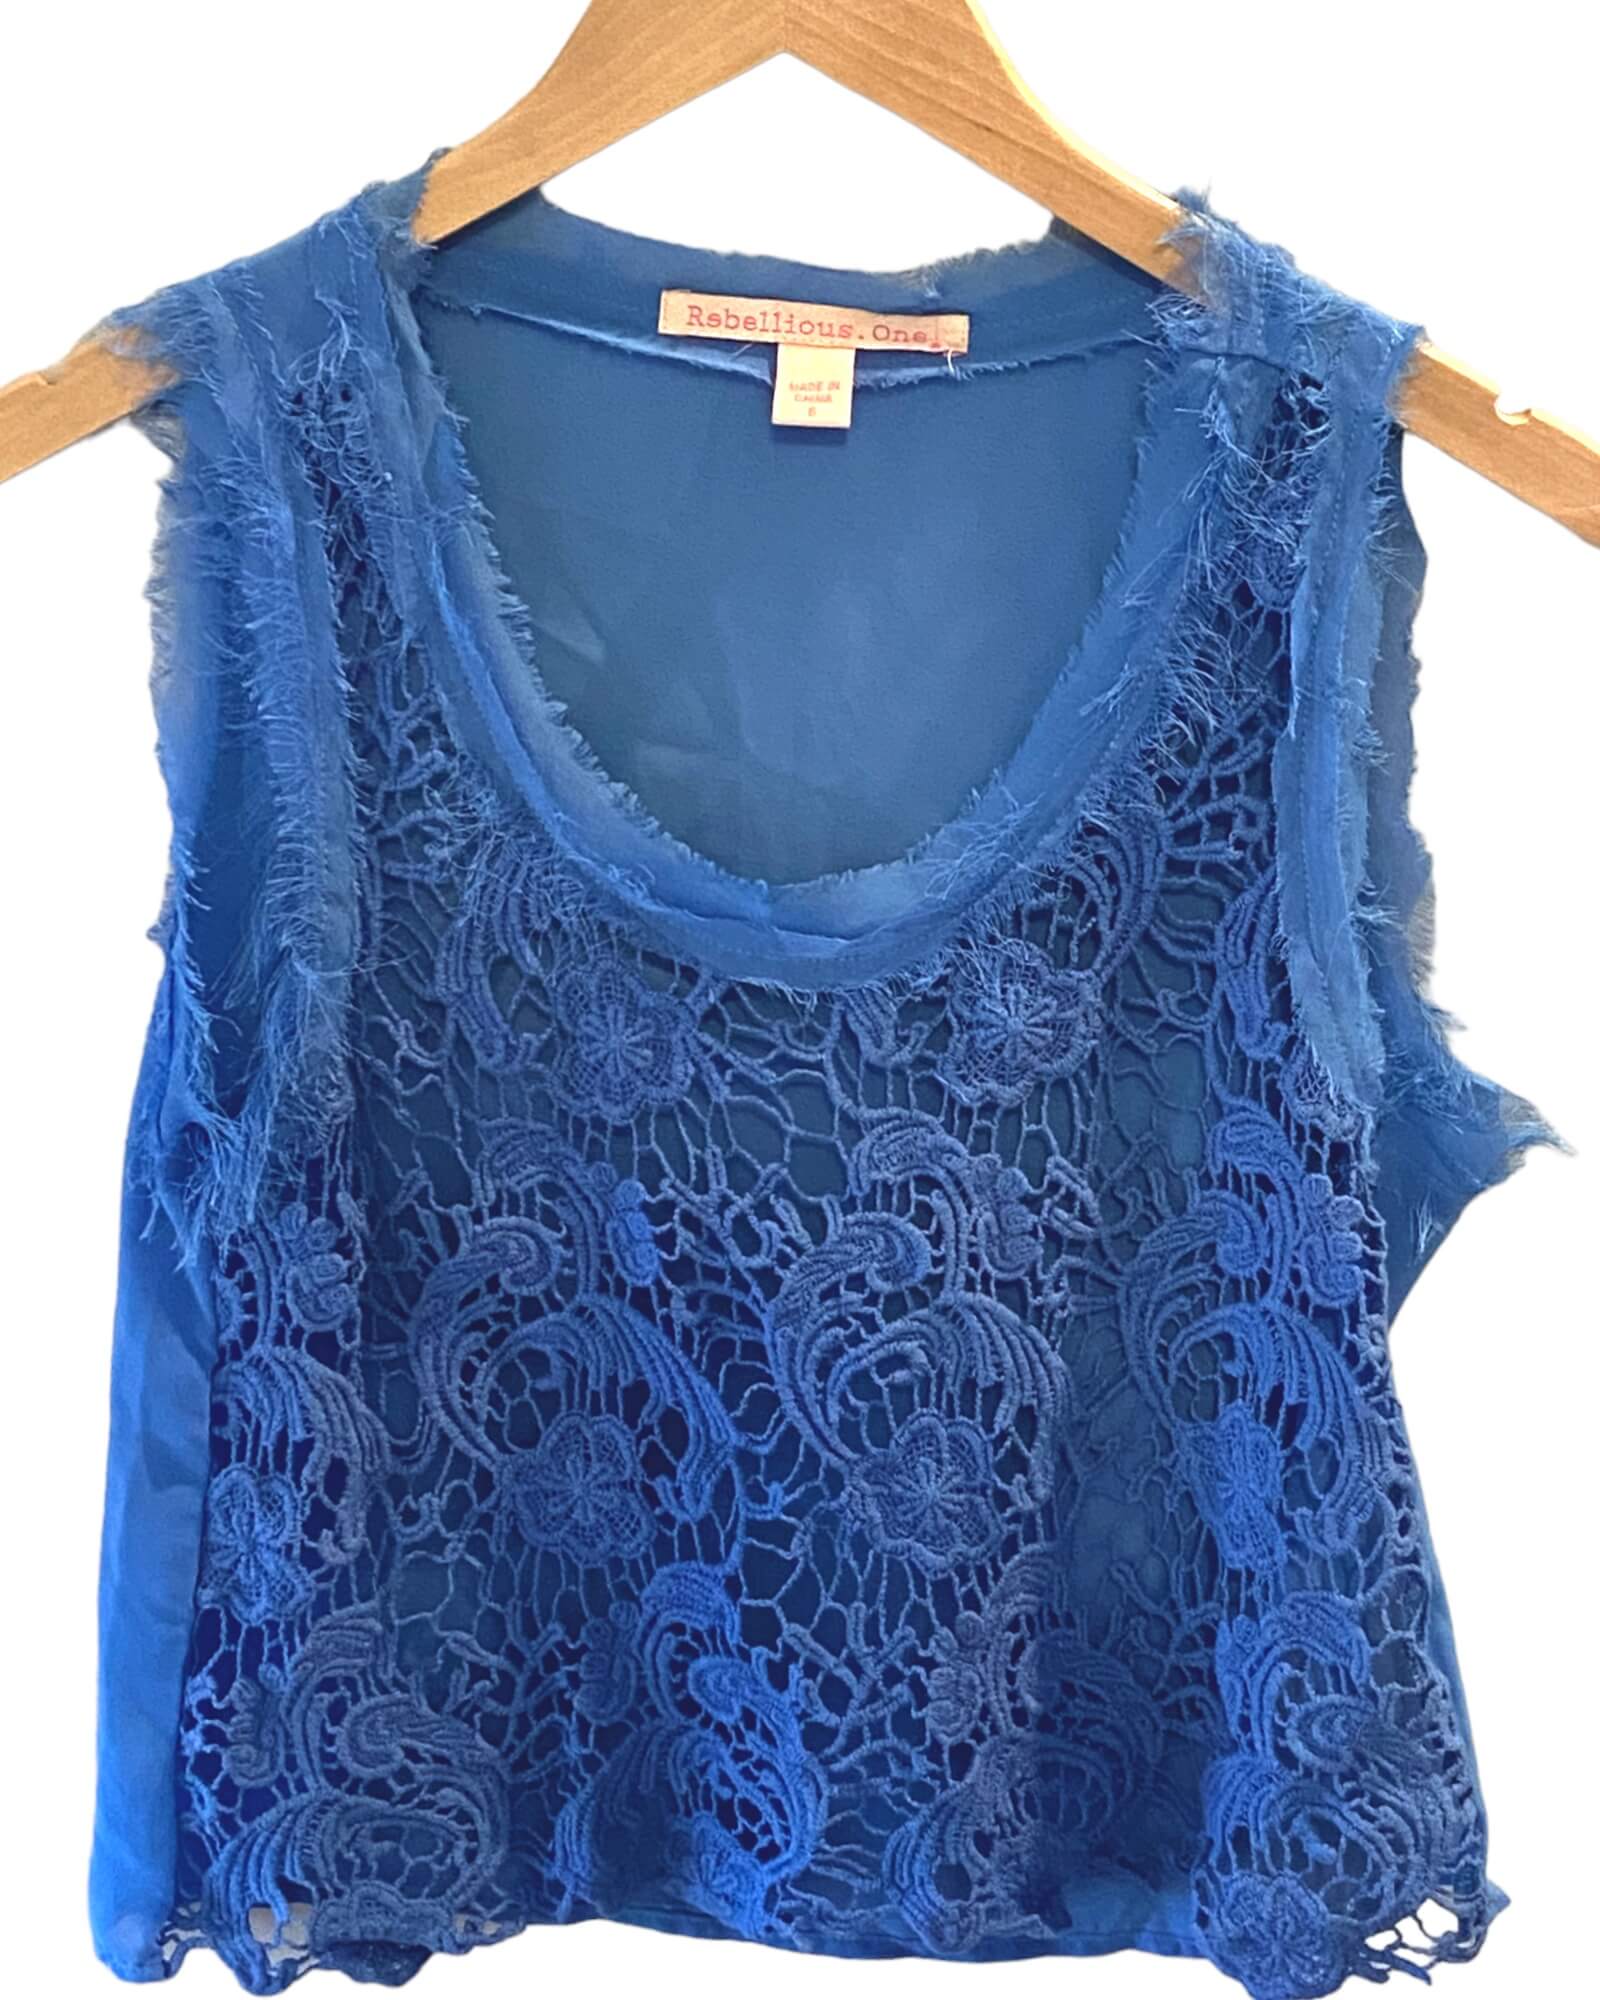 Cool Winter REBELLIOUS ONE blue crochet lace sleeveless crop top